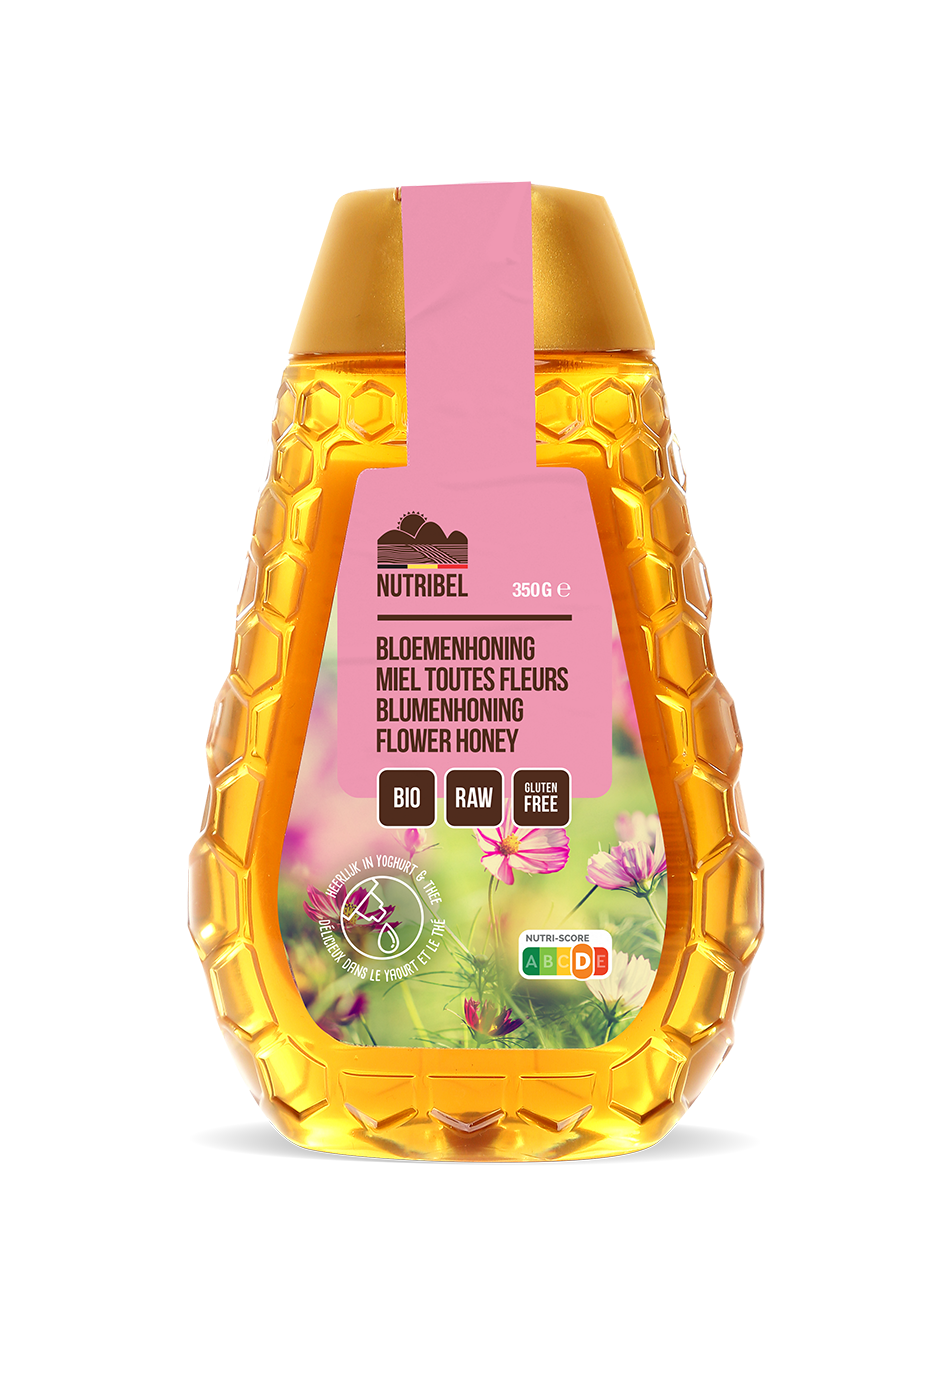 Nutribel Bloemen honing bio 350g